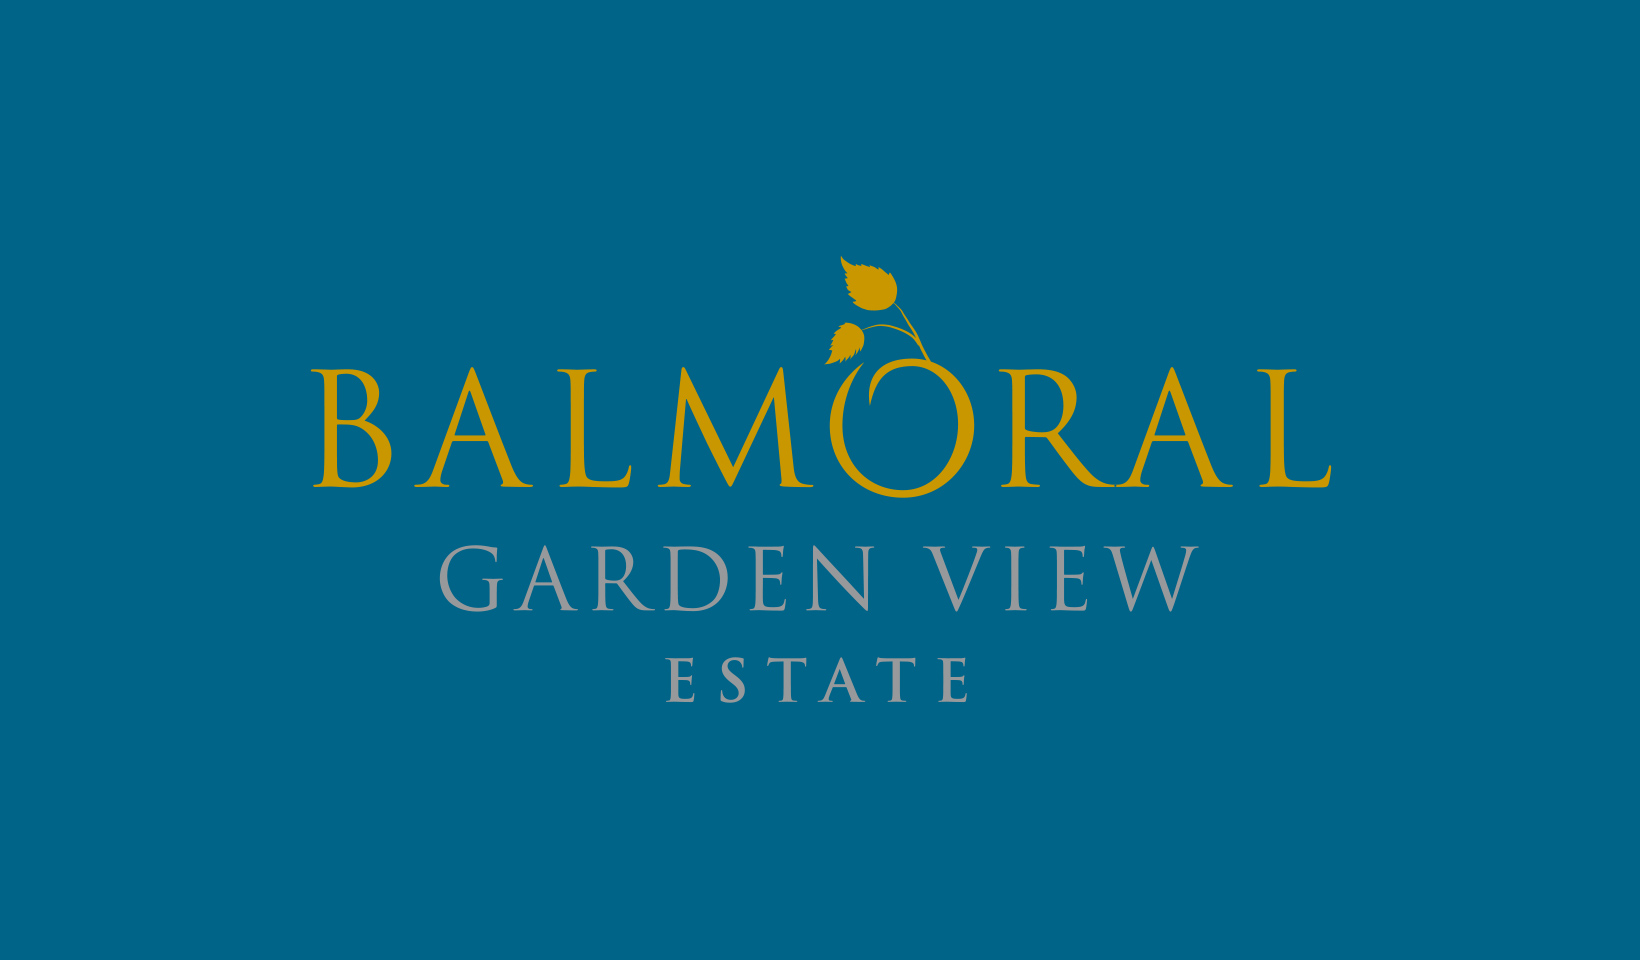 Balmoral Garden View Estate Brand Identity Development by Think Creative Agency